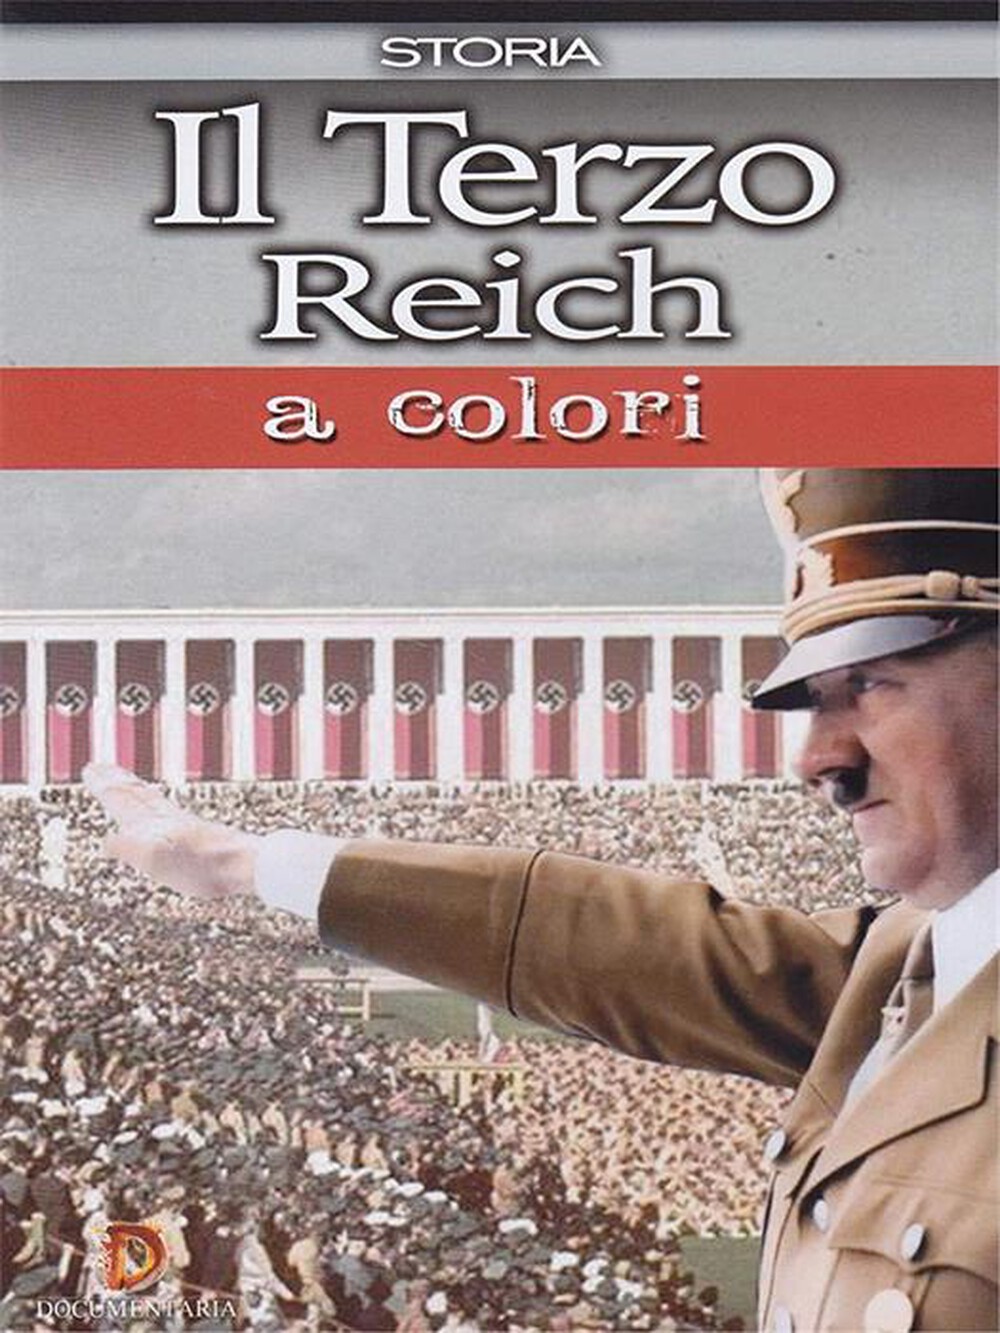 "CINEHOLLYWOOD - Terzo Reich A Colori (Il)"